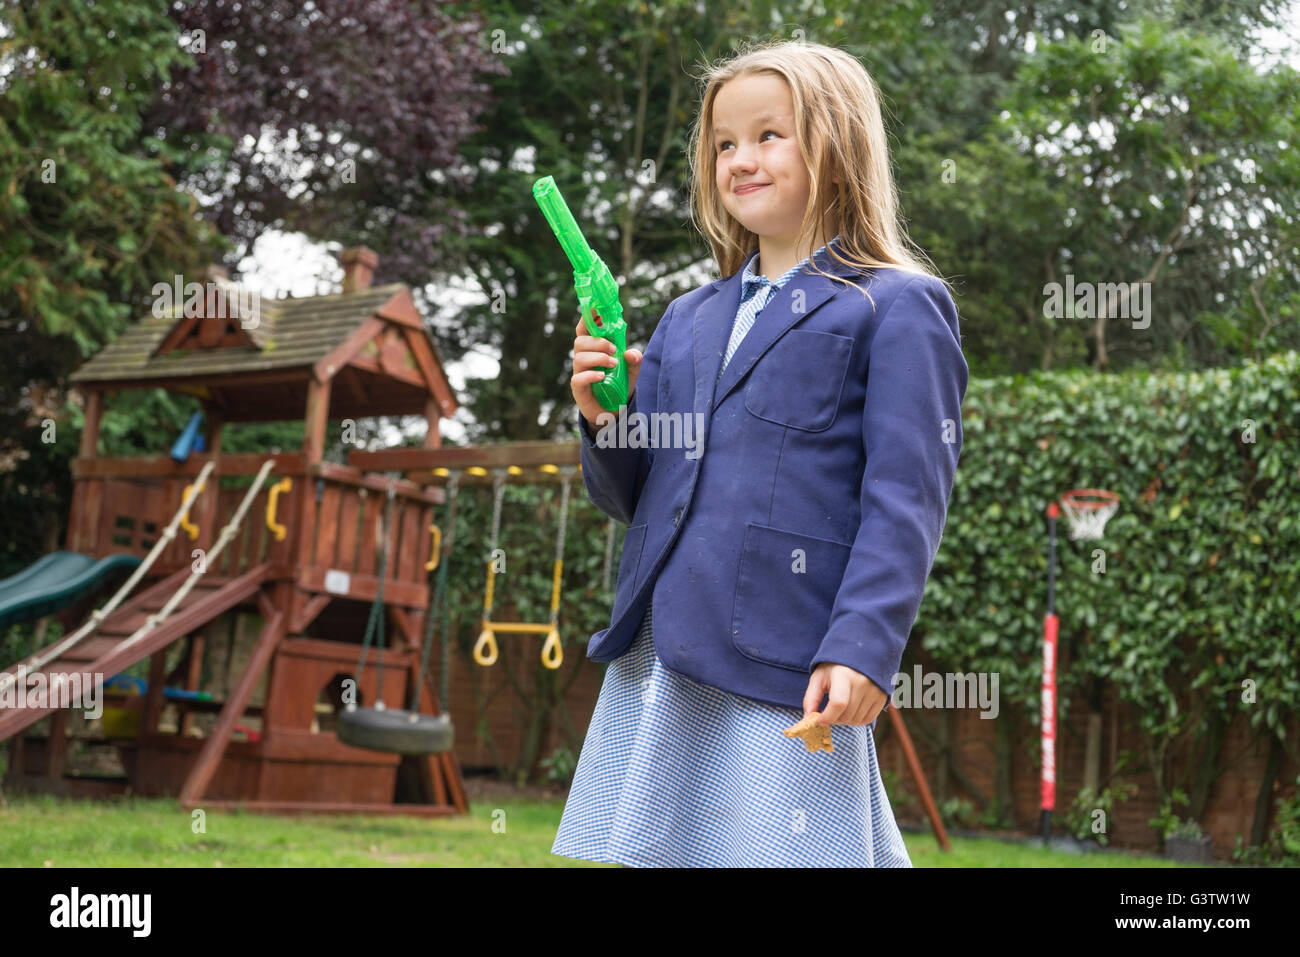 School Uniform Blazer High Resolution Stock Photography and Images - Alamy